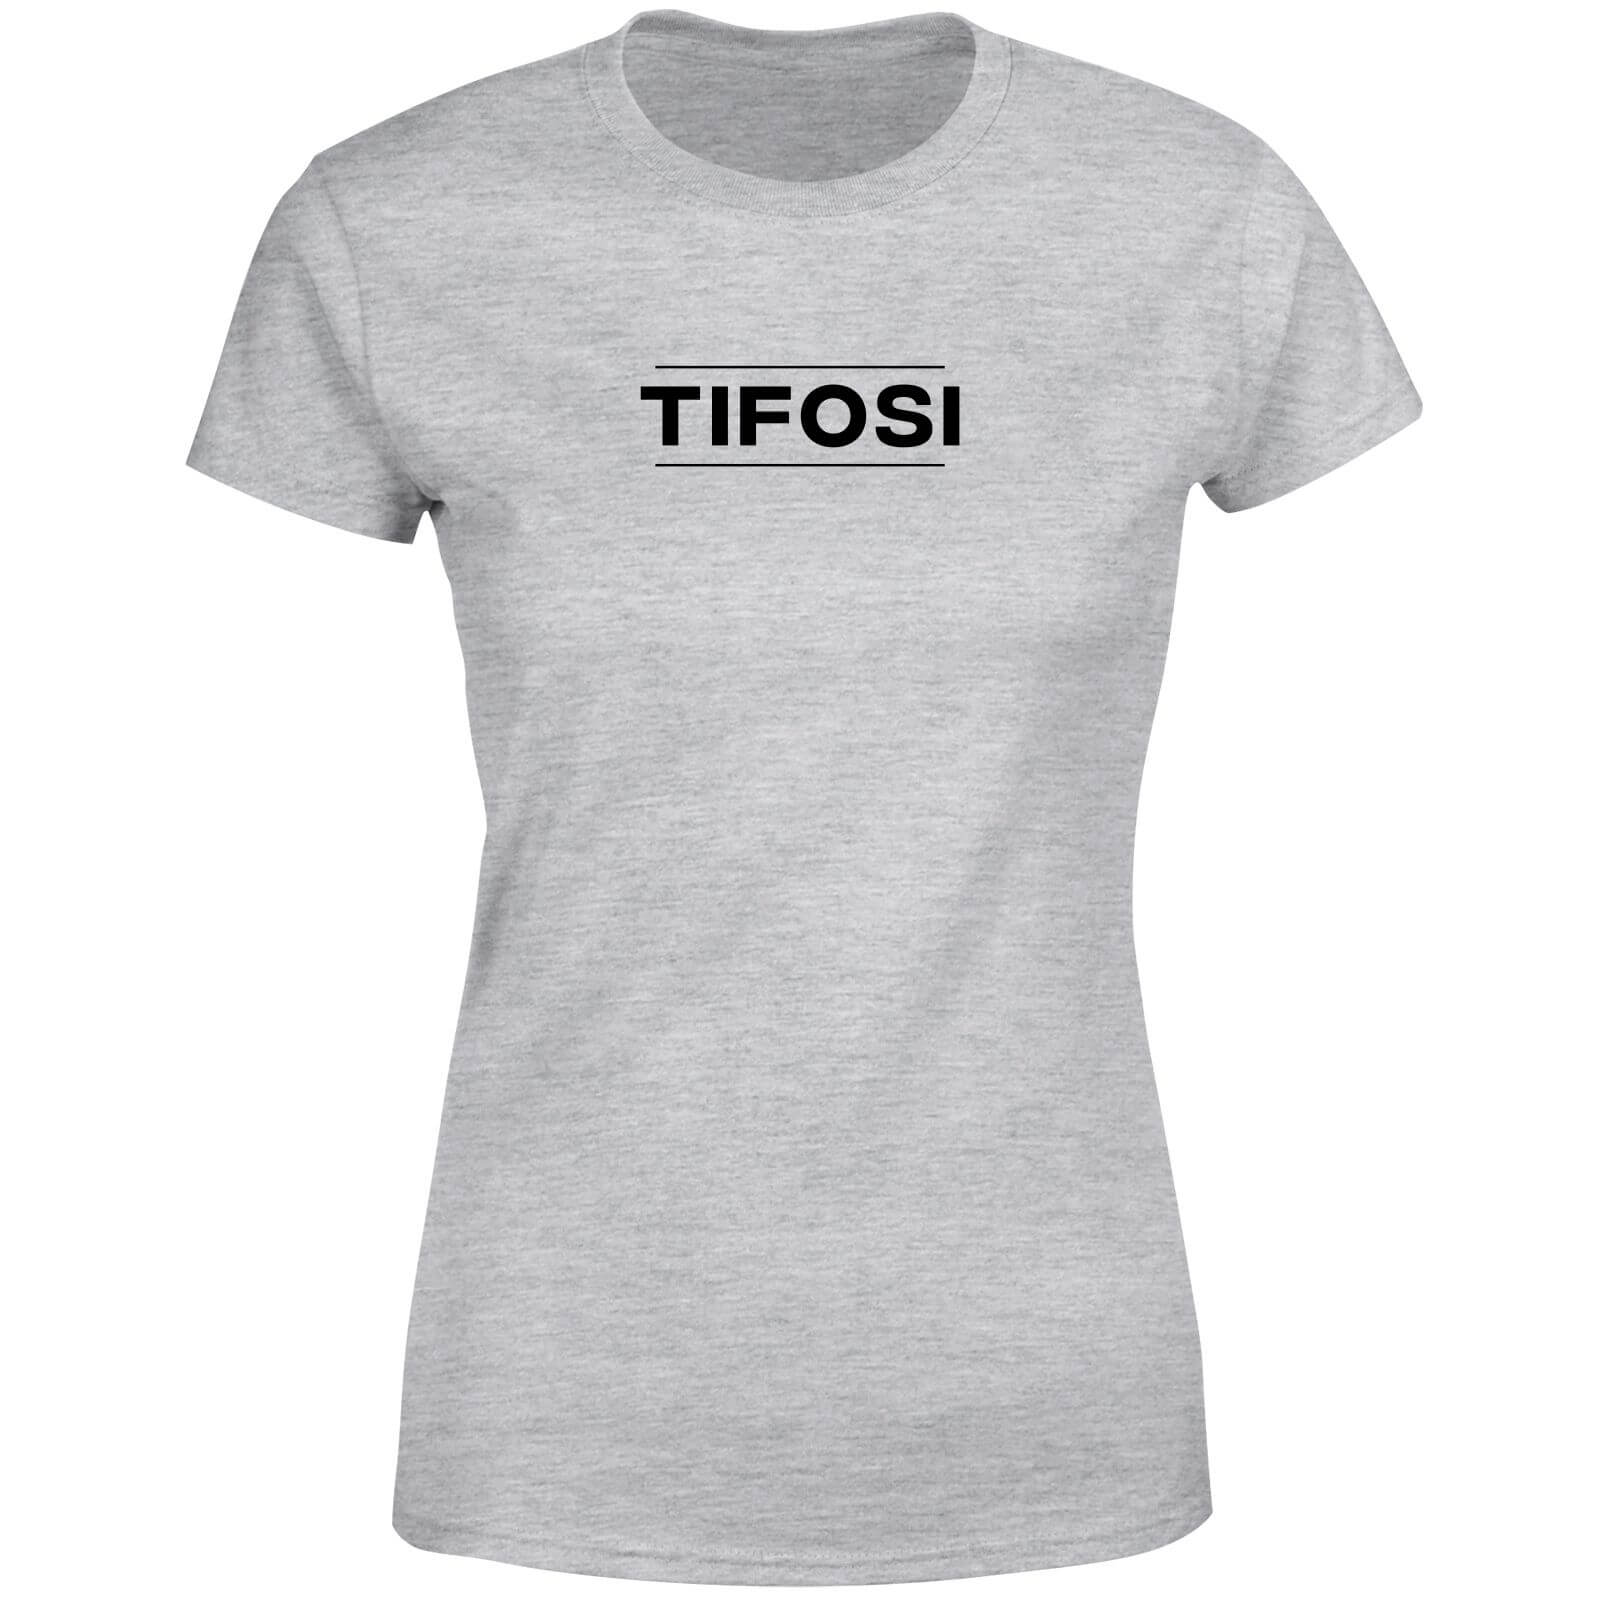 Tifosi Women's T-Shirt - Grey - XL - Grey